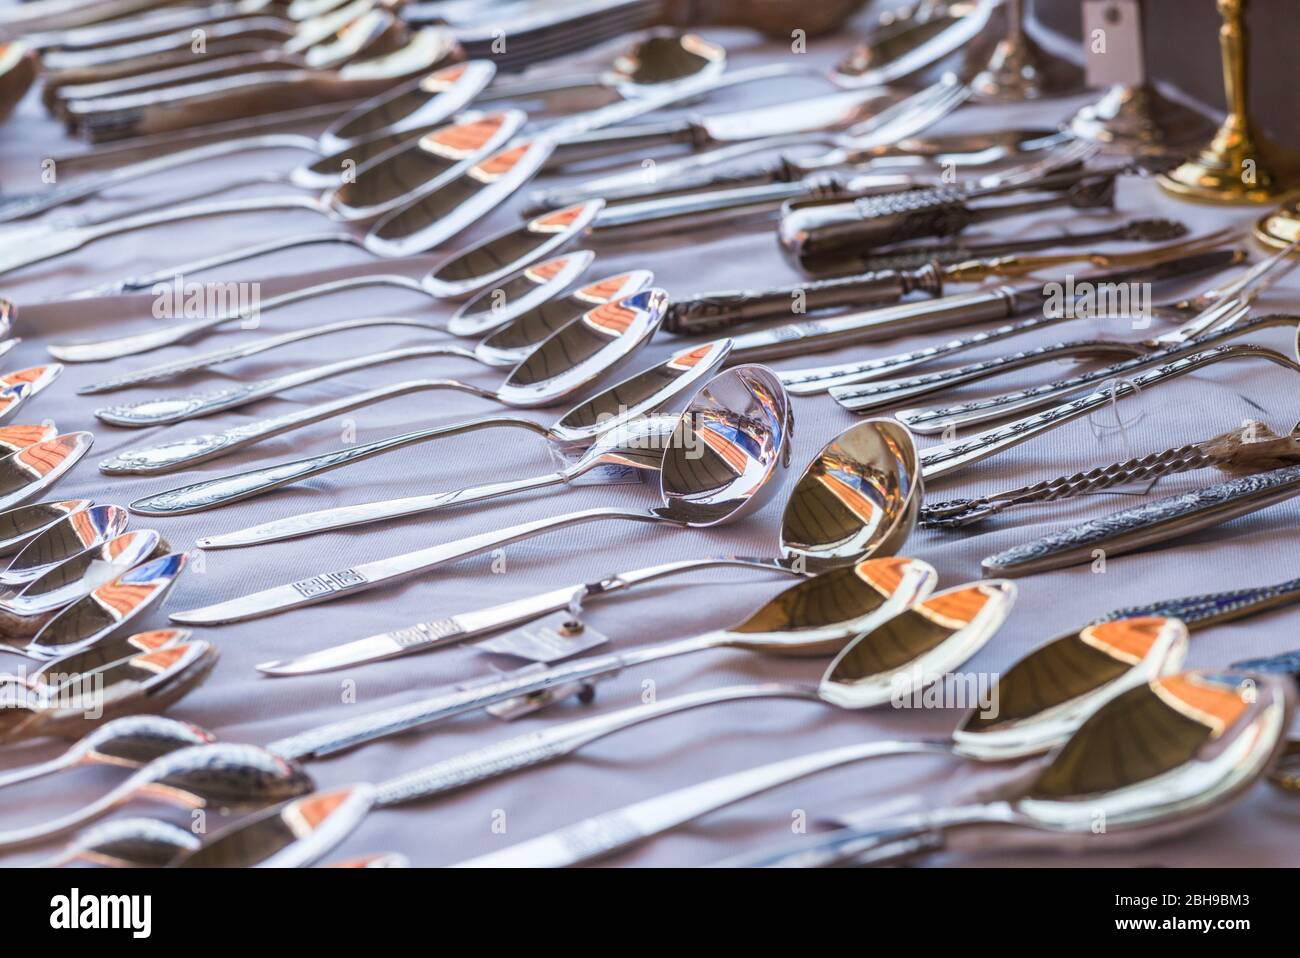 Armenia, Yerevan, Vernissage Market, silver spoons Stock Photo